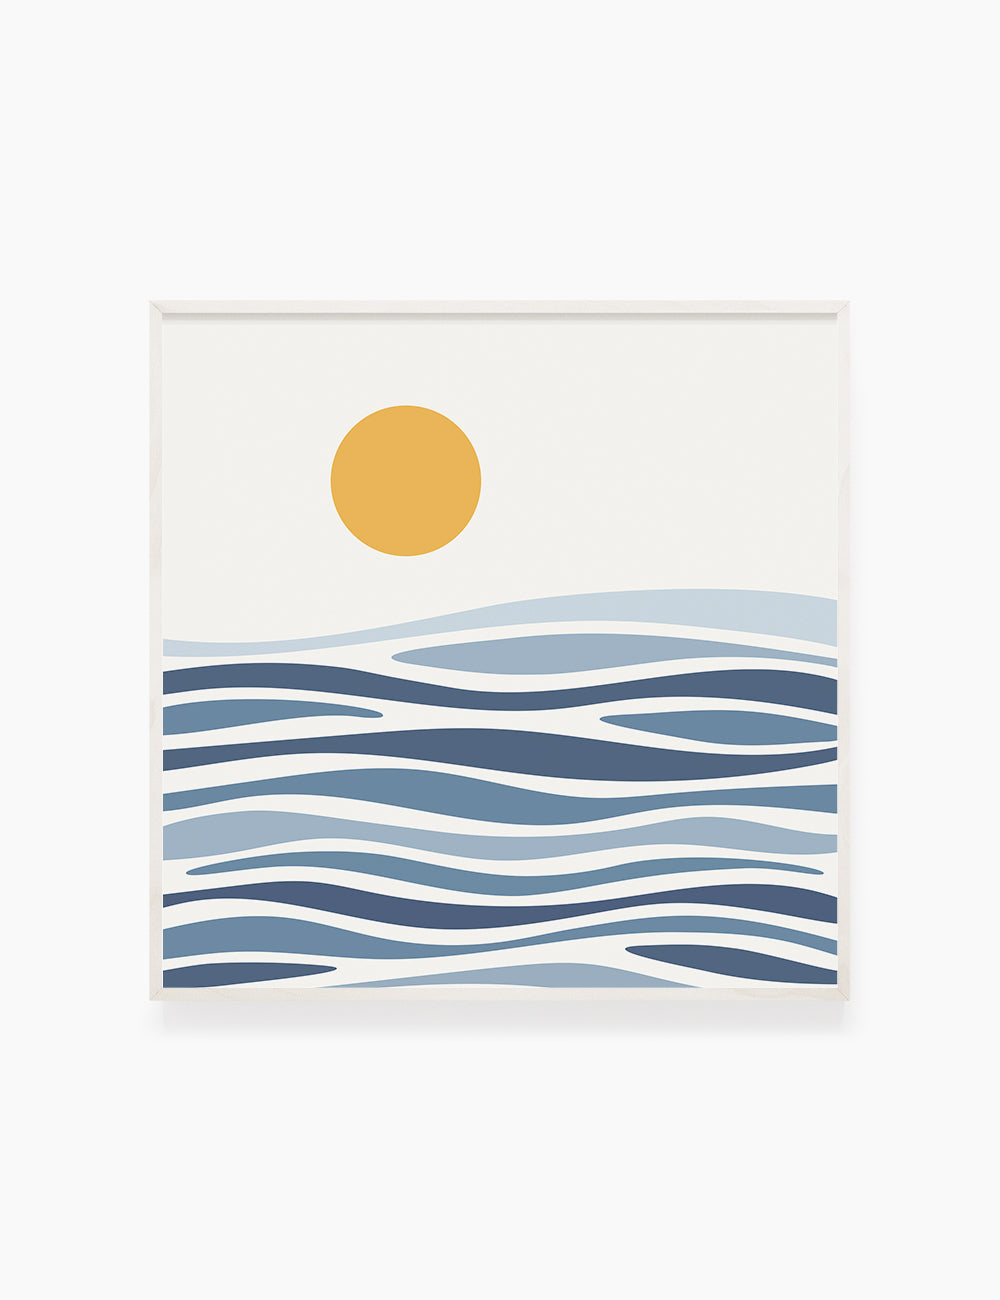 SUN OVER THE BLUE OCEAN WAVES. BOHO ART. Minimalist. Abstract. Printable Wall Art Illustration. - PAPER MOON Art & Design